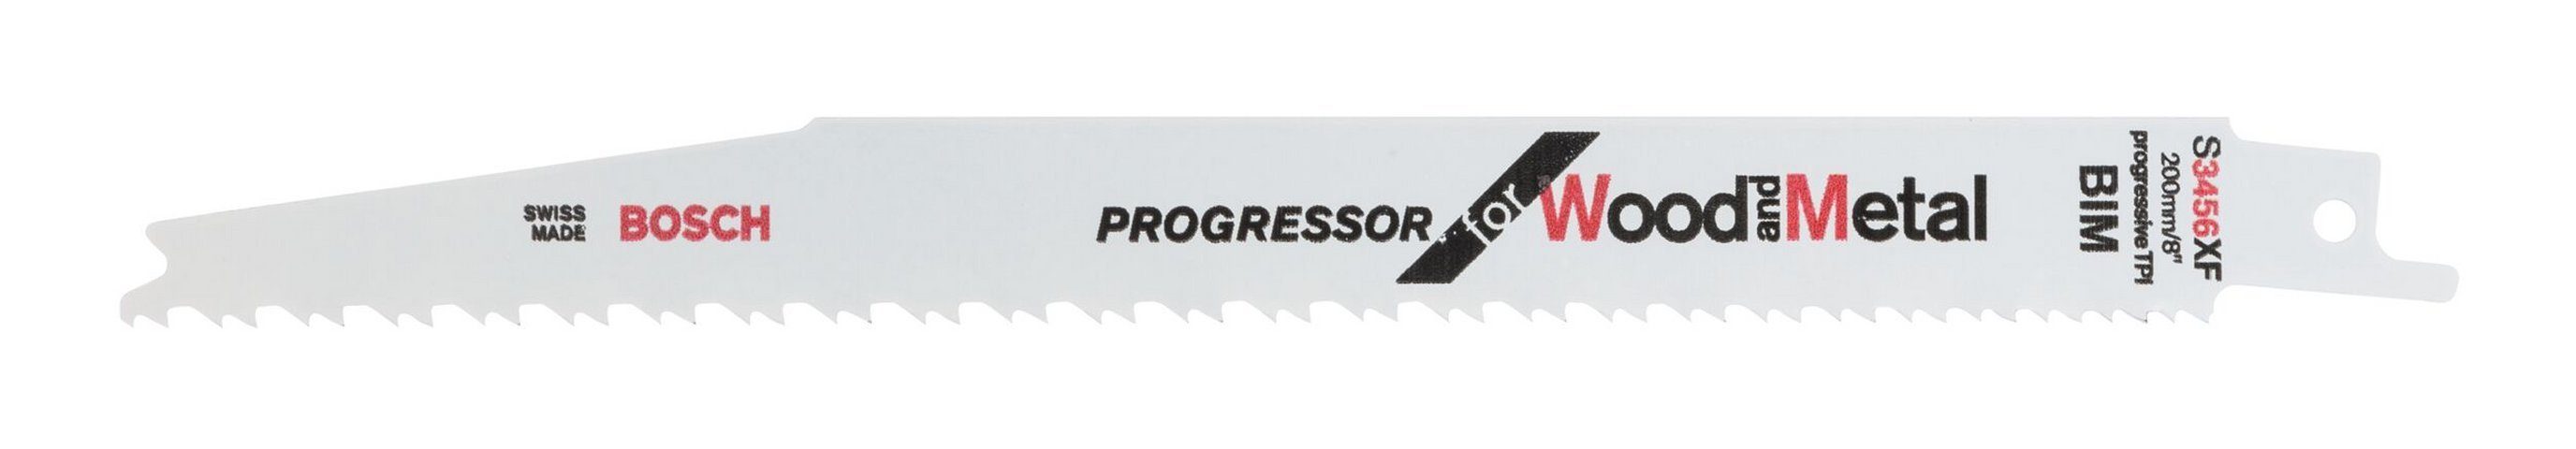 Stück), Progressor 3456 - XF (2 Säbelsägeblatt for S Wood Metal and BOSCH 2er-Pack